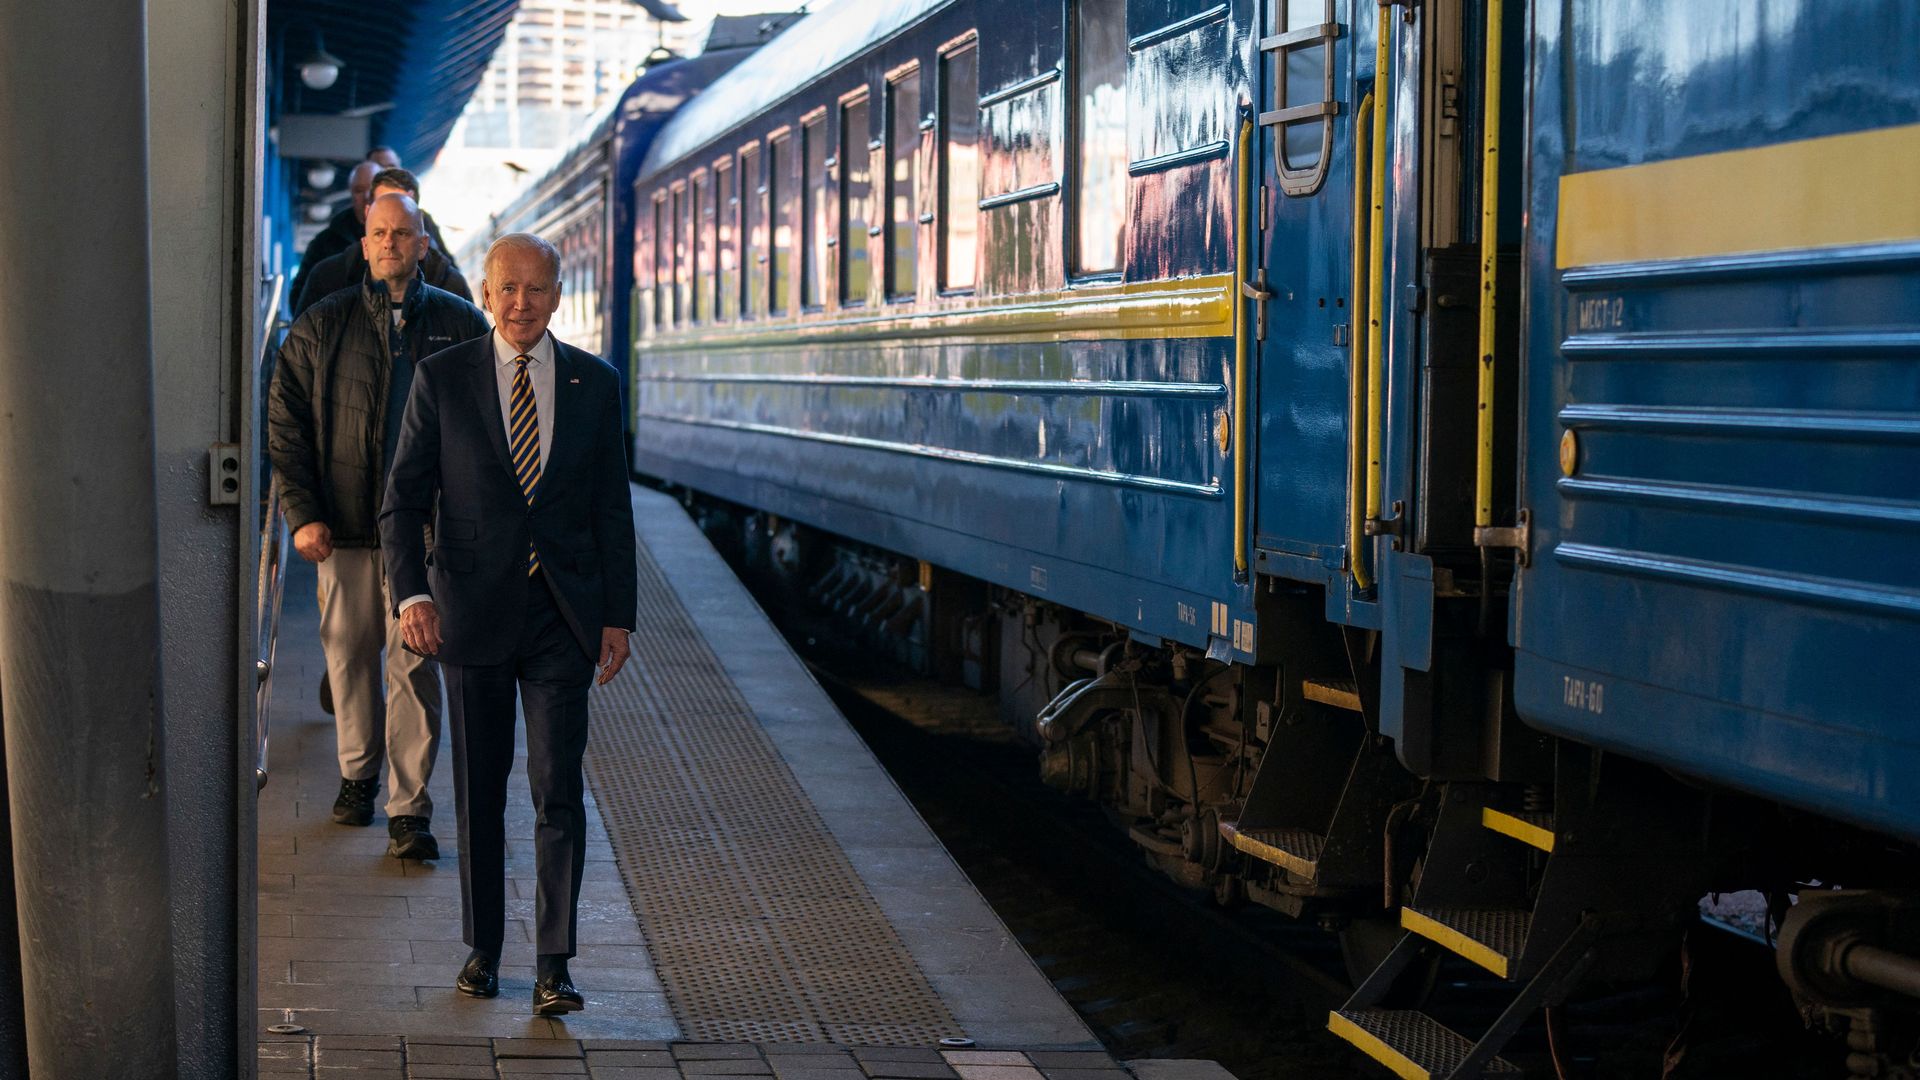 Joe Biden walks along the train platform after a surprise visit to meet with Ukrainian President Volodymyr Zelenskyy, in Kyiv on February 20